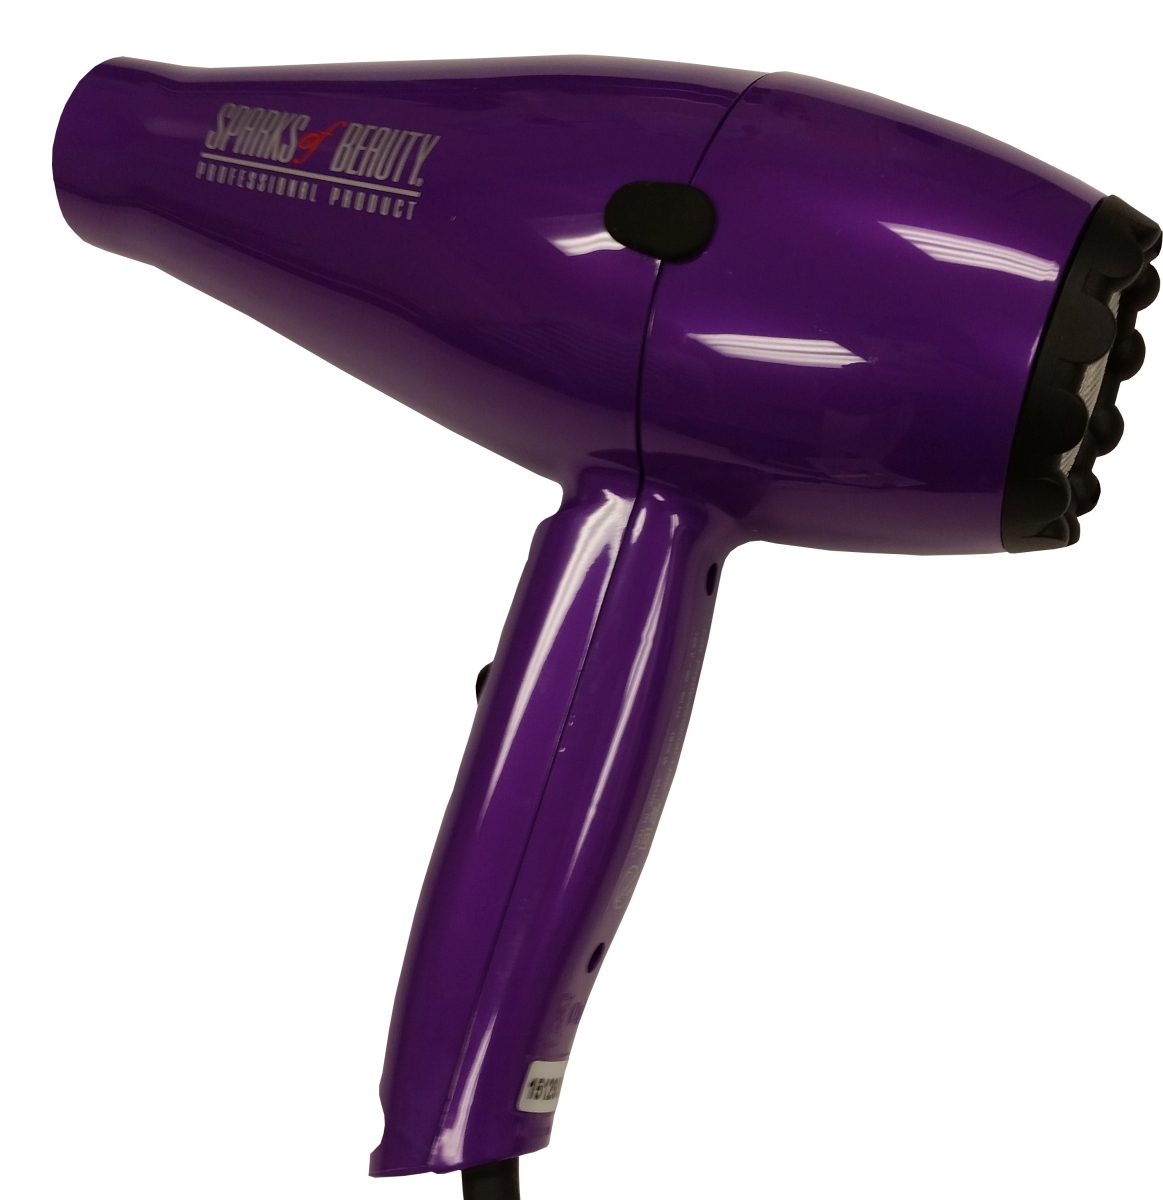 Sparks Of Beauty Hair Dryer, Purple